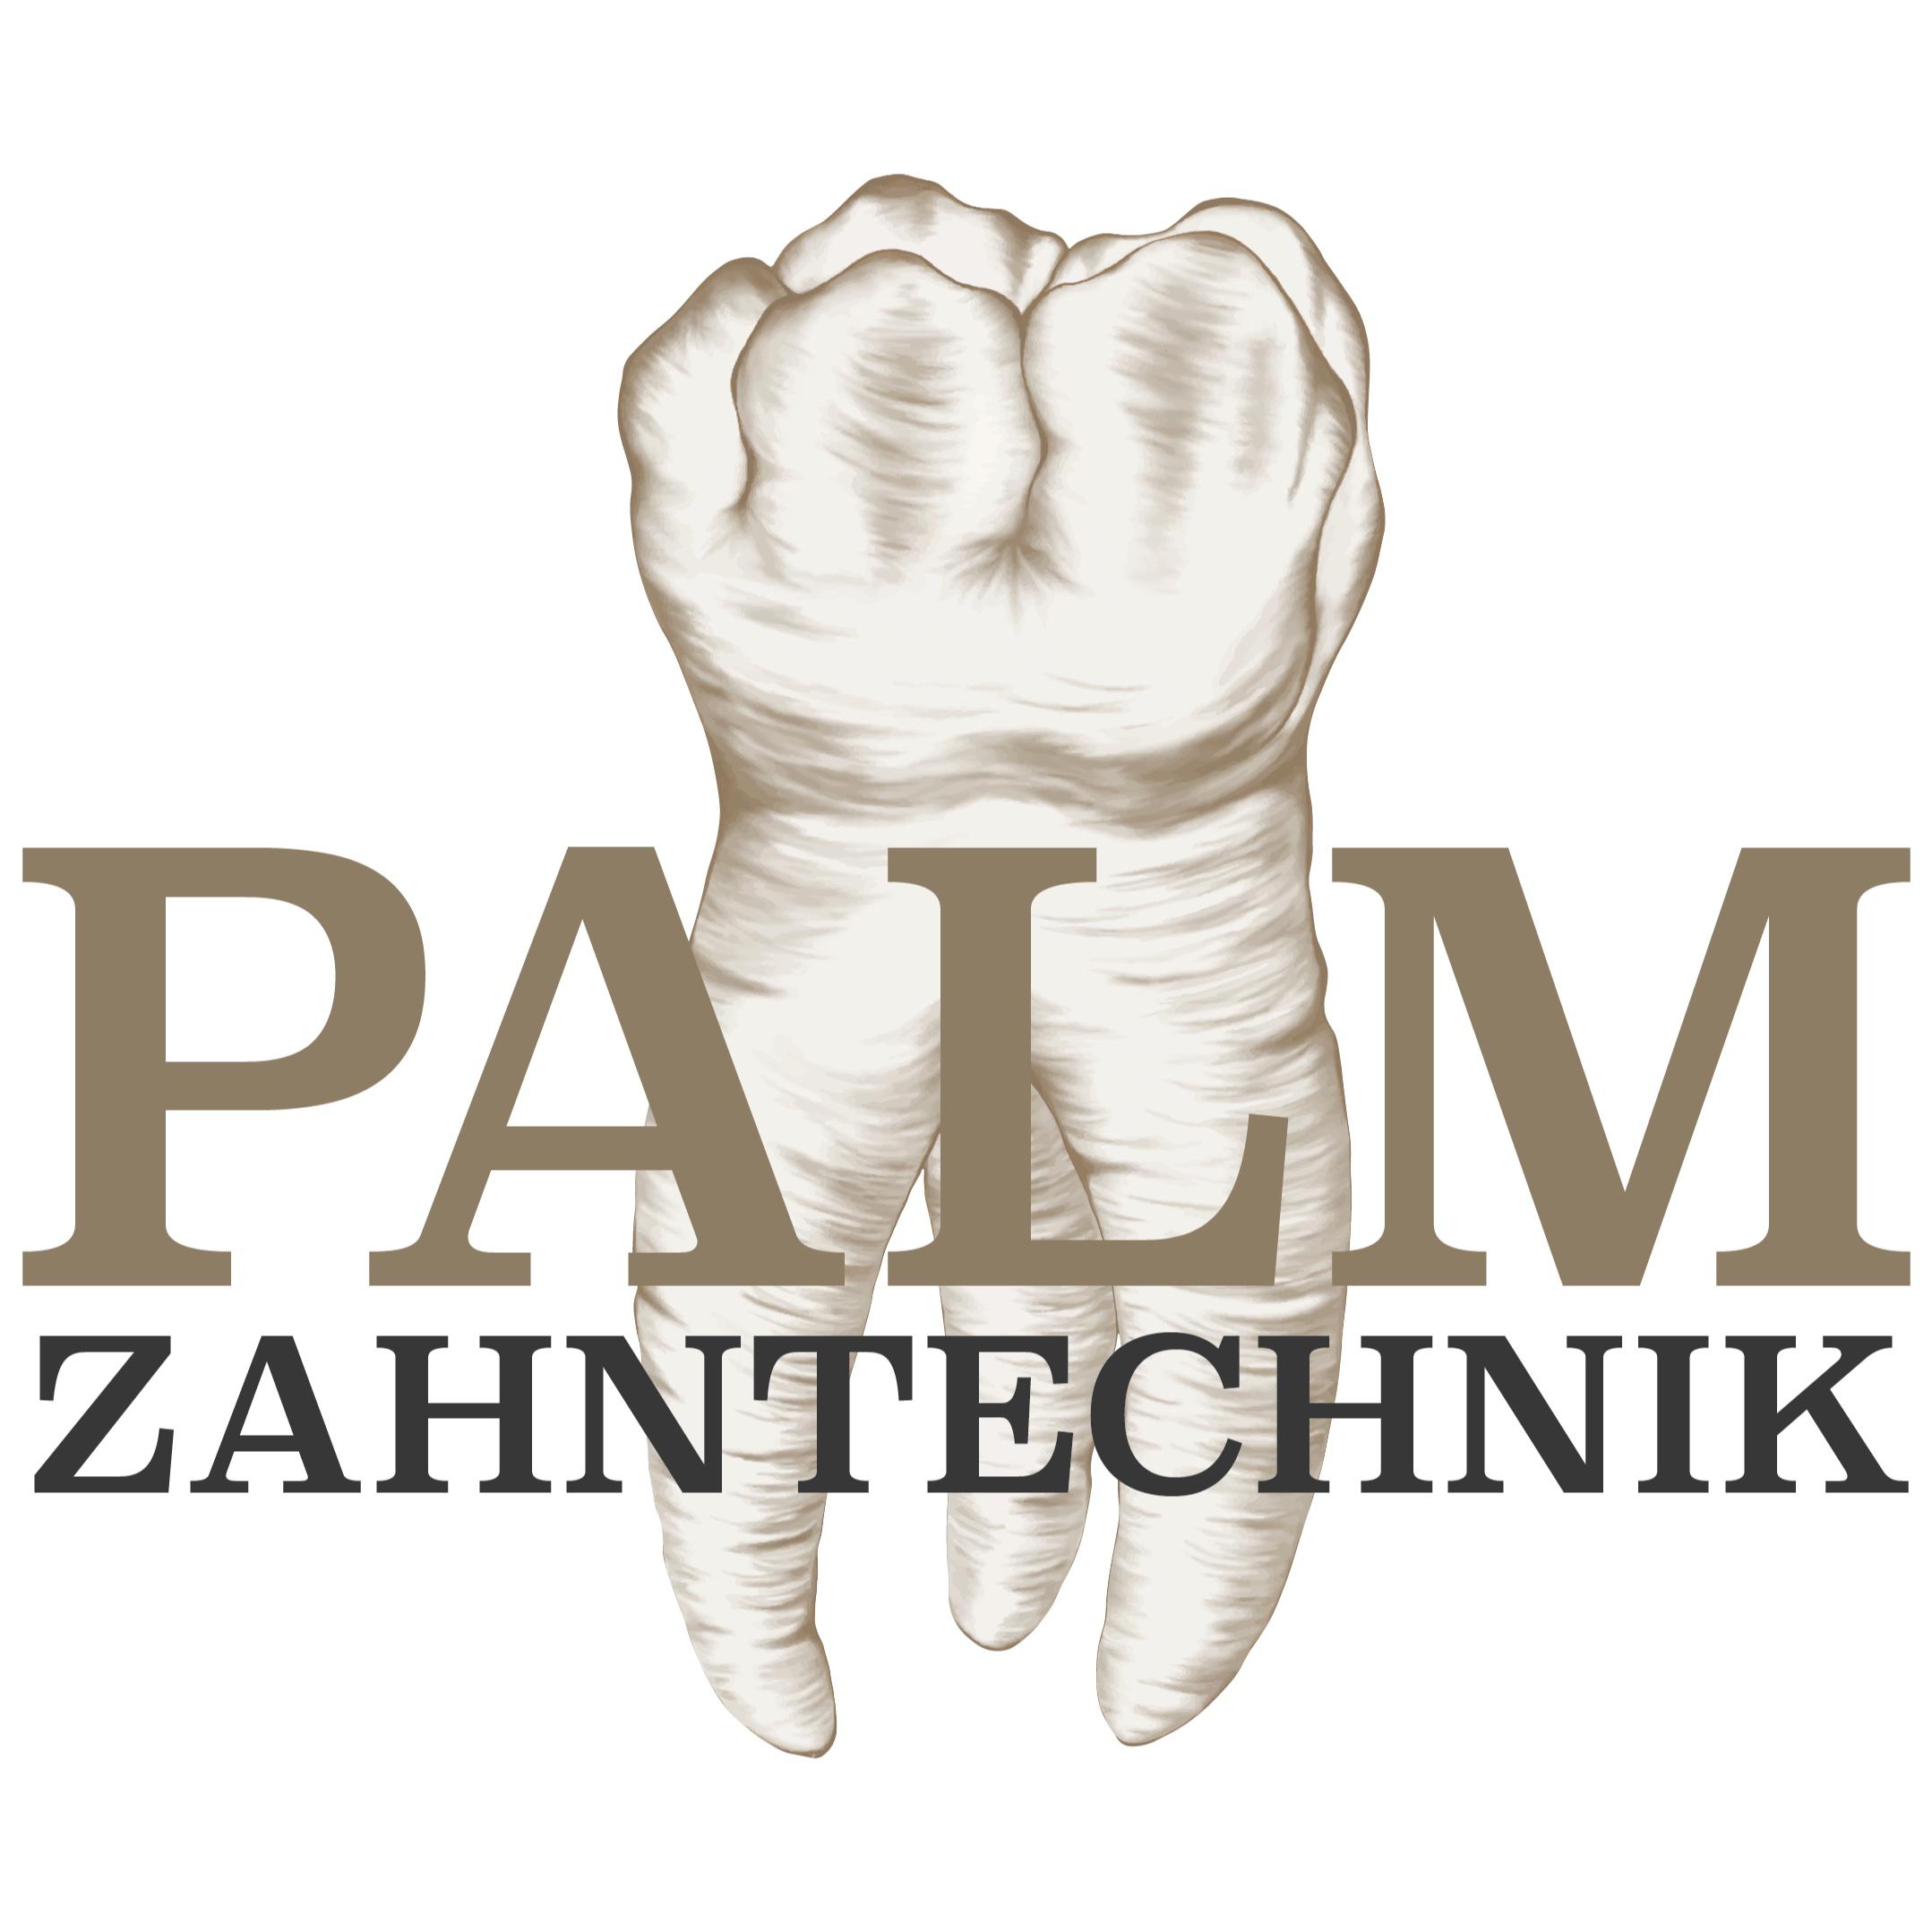 Palm Zahntechnik Inh. Sebastian Palm Logo